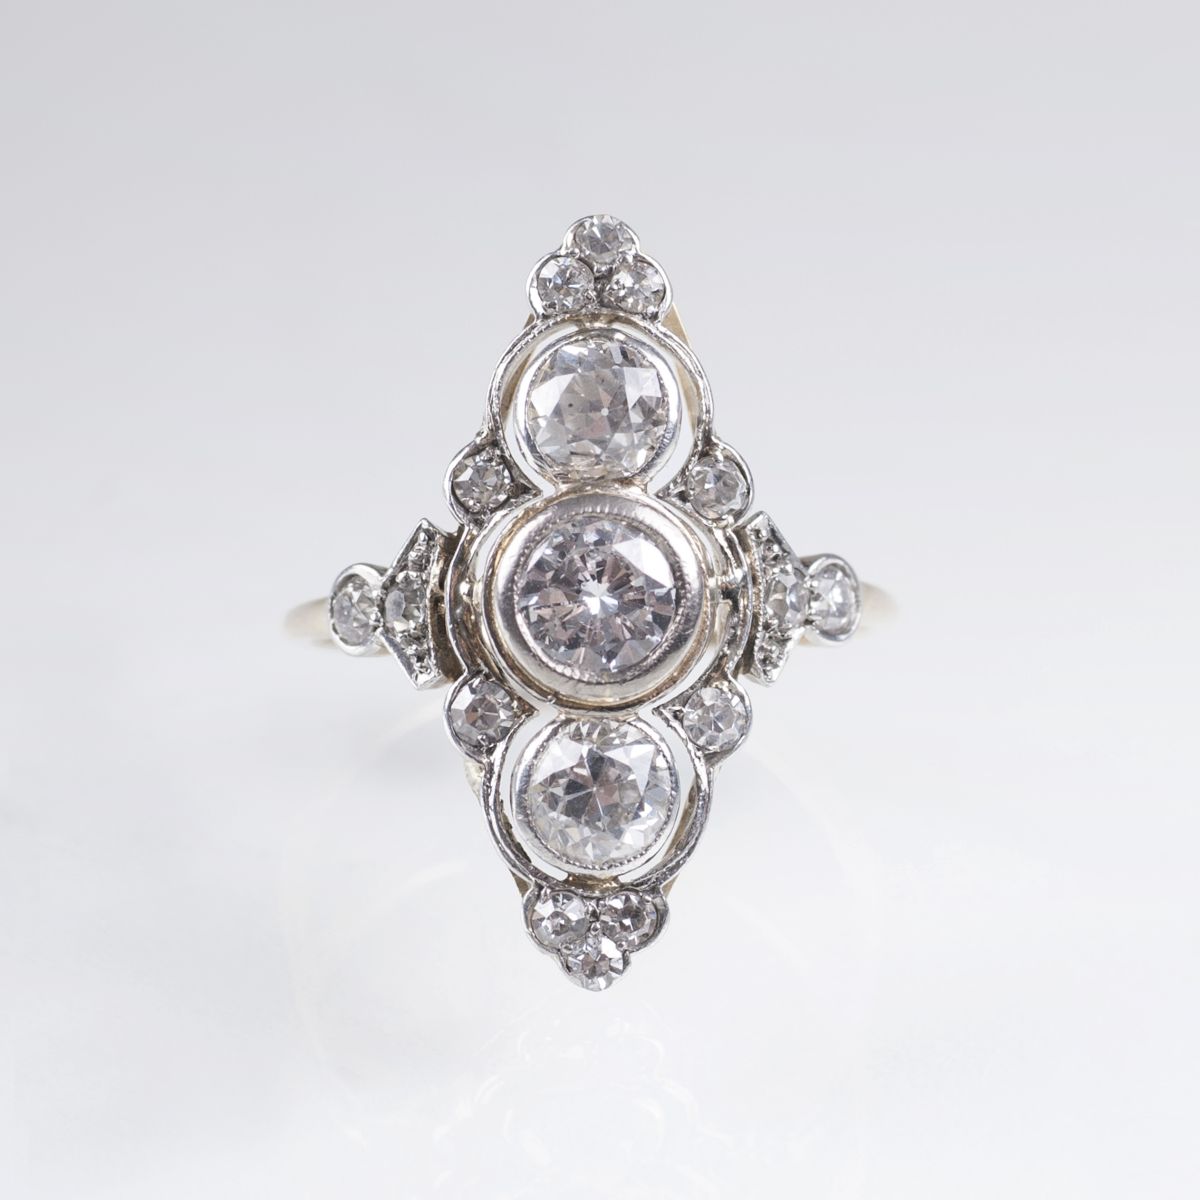 A Vintage diamond ring